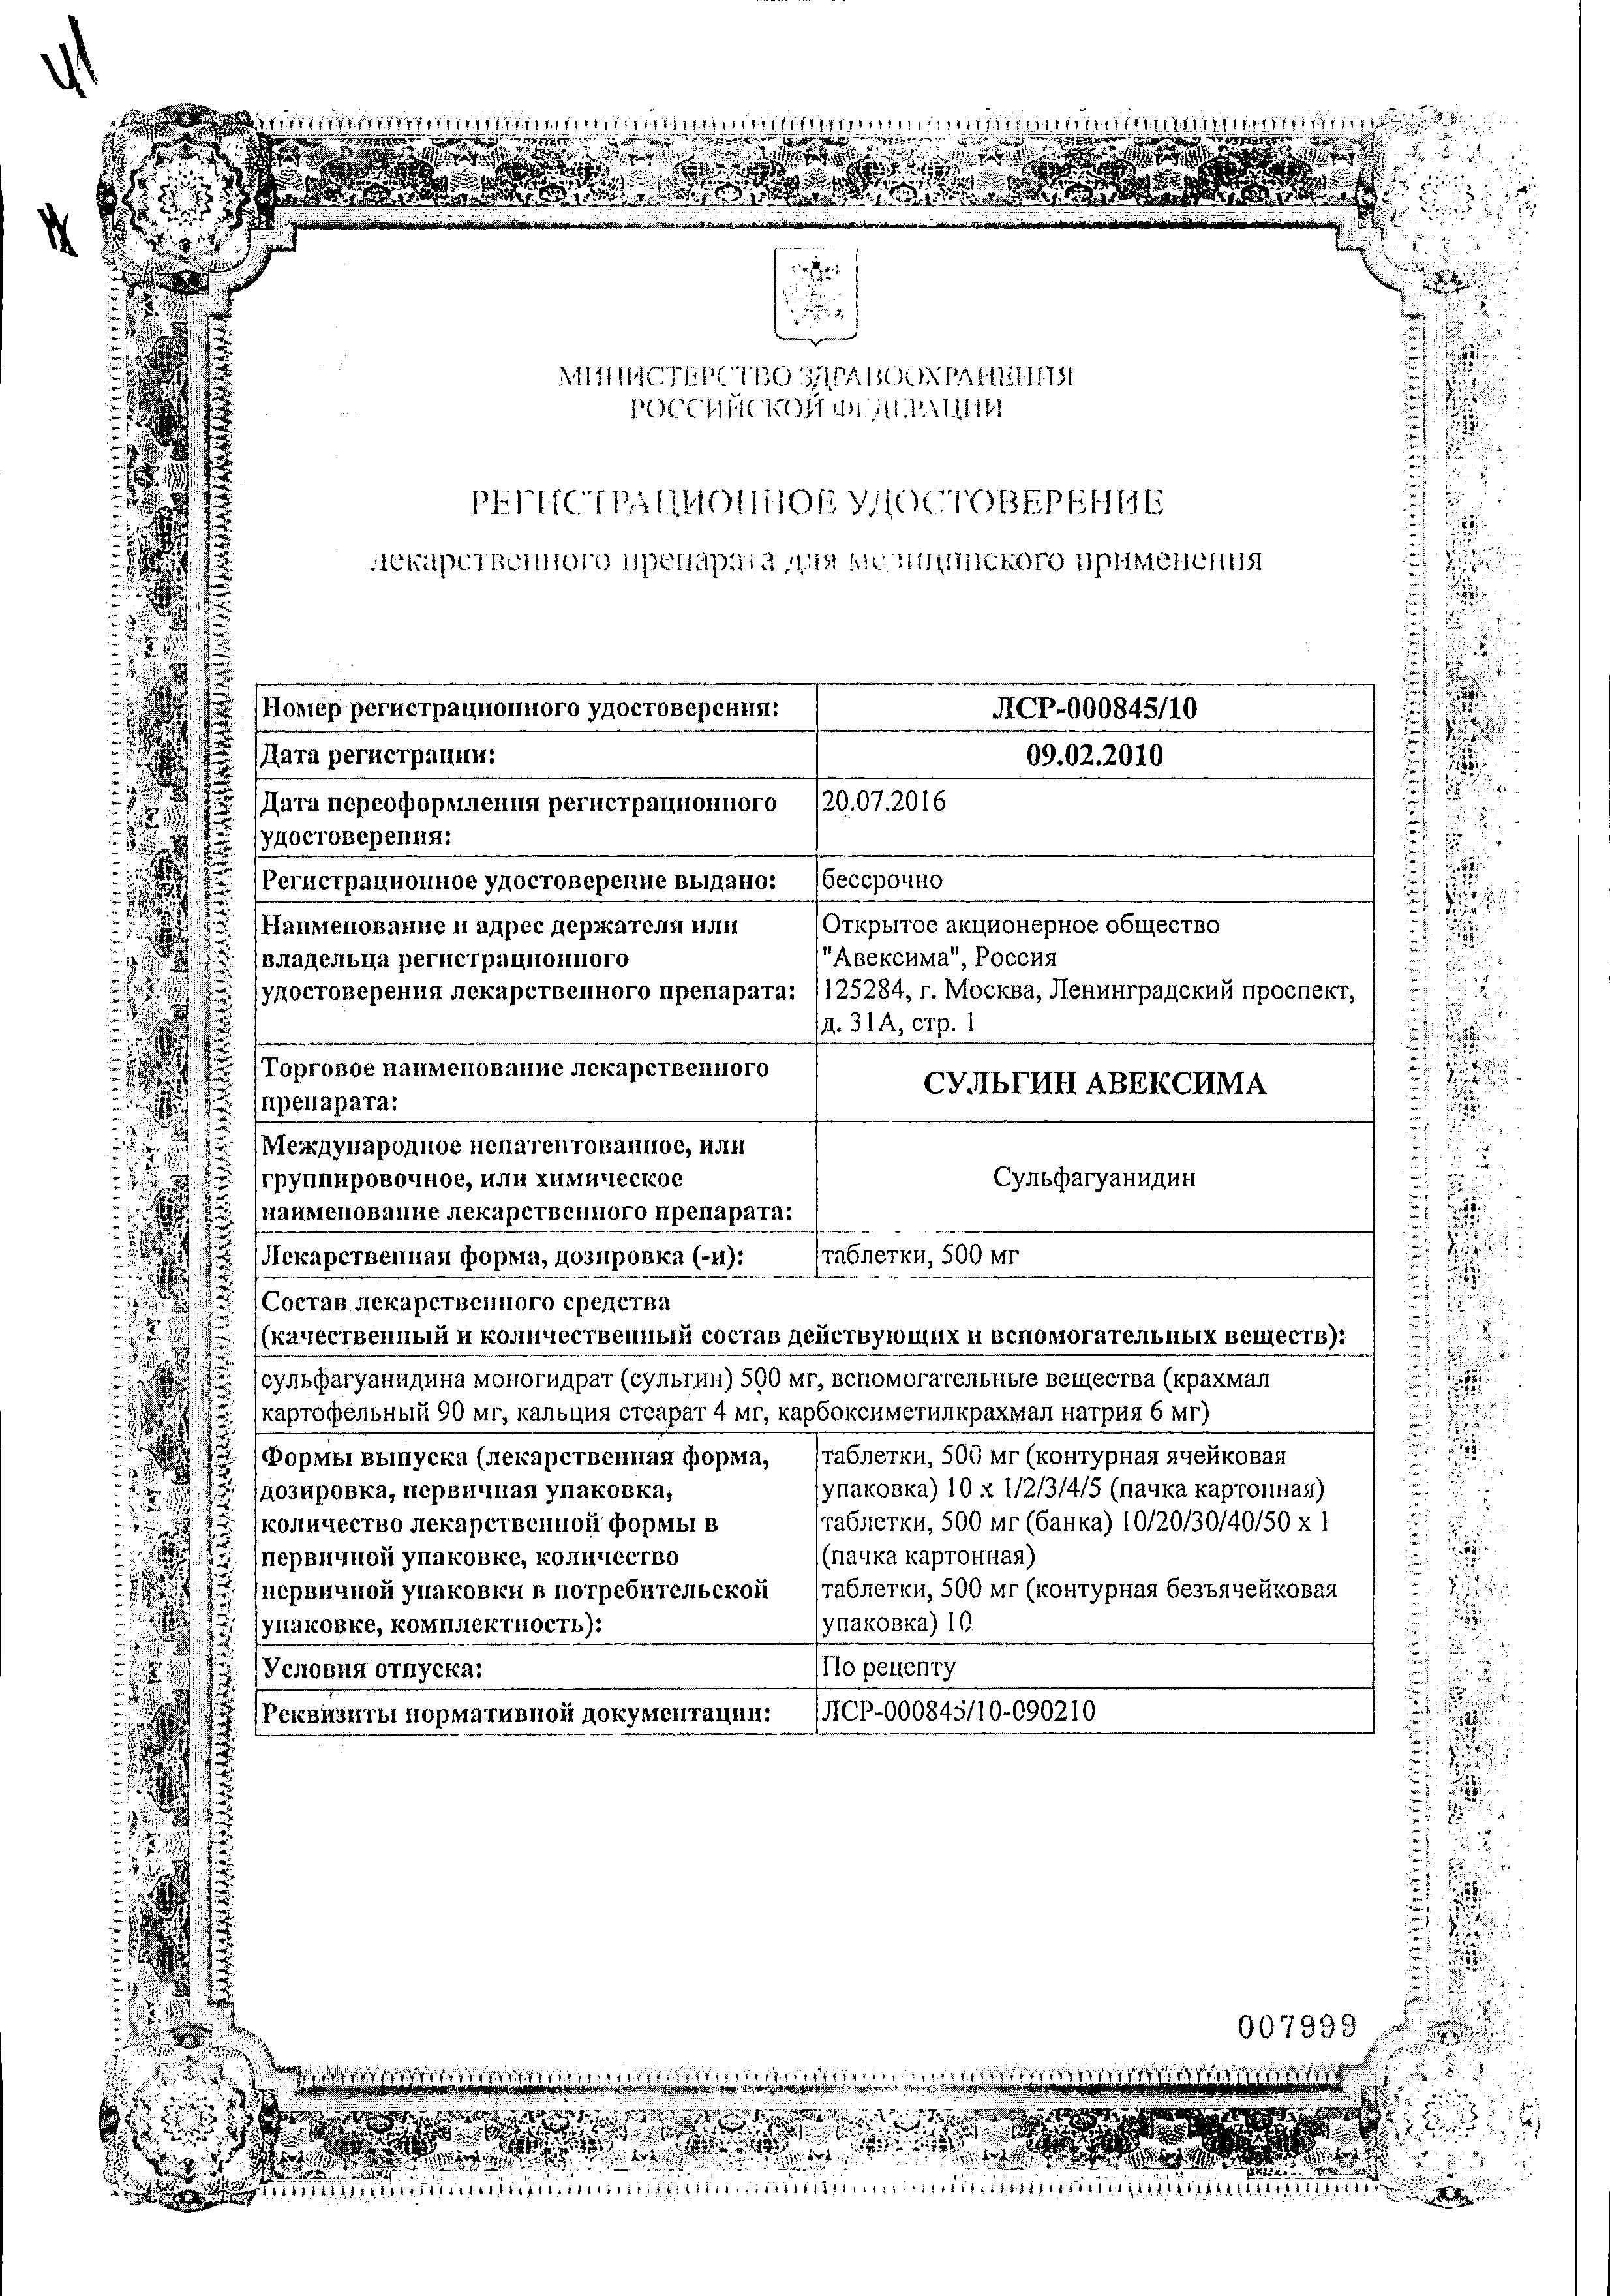 Сульгин Авексима сертификат